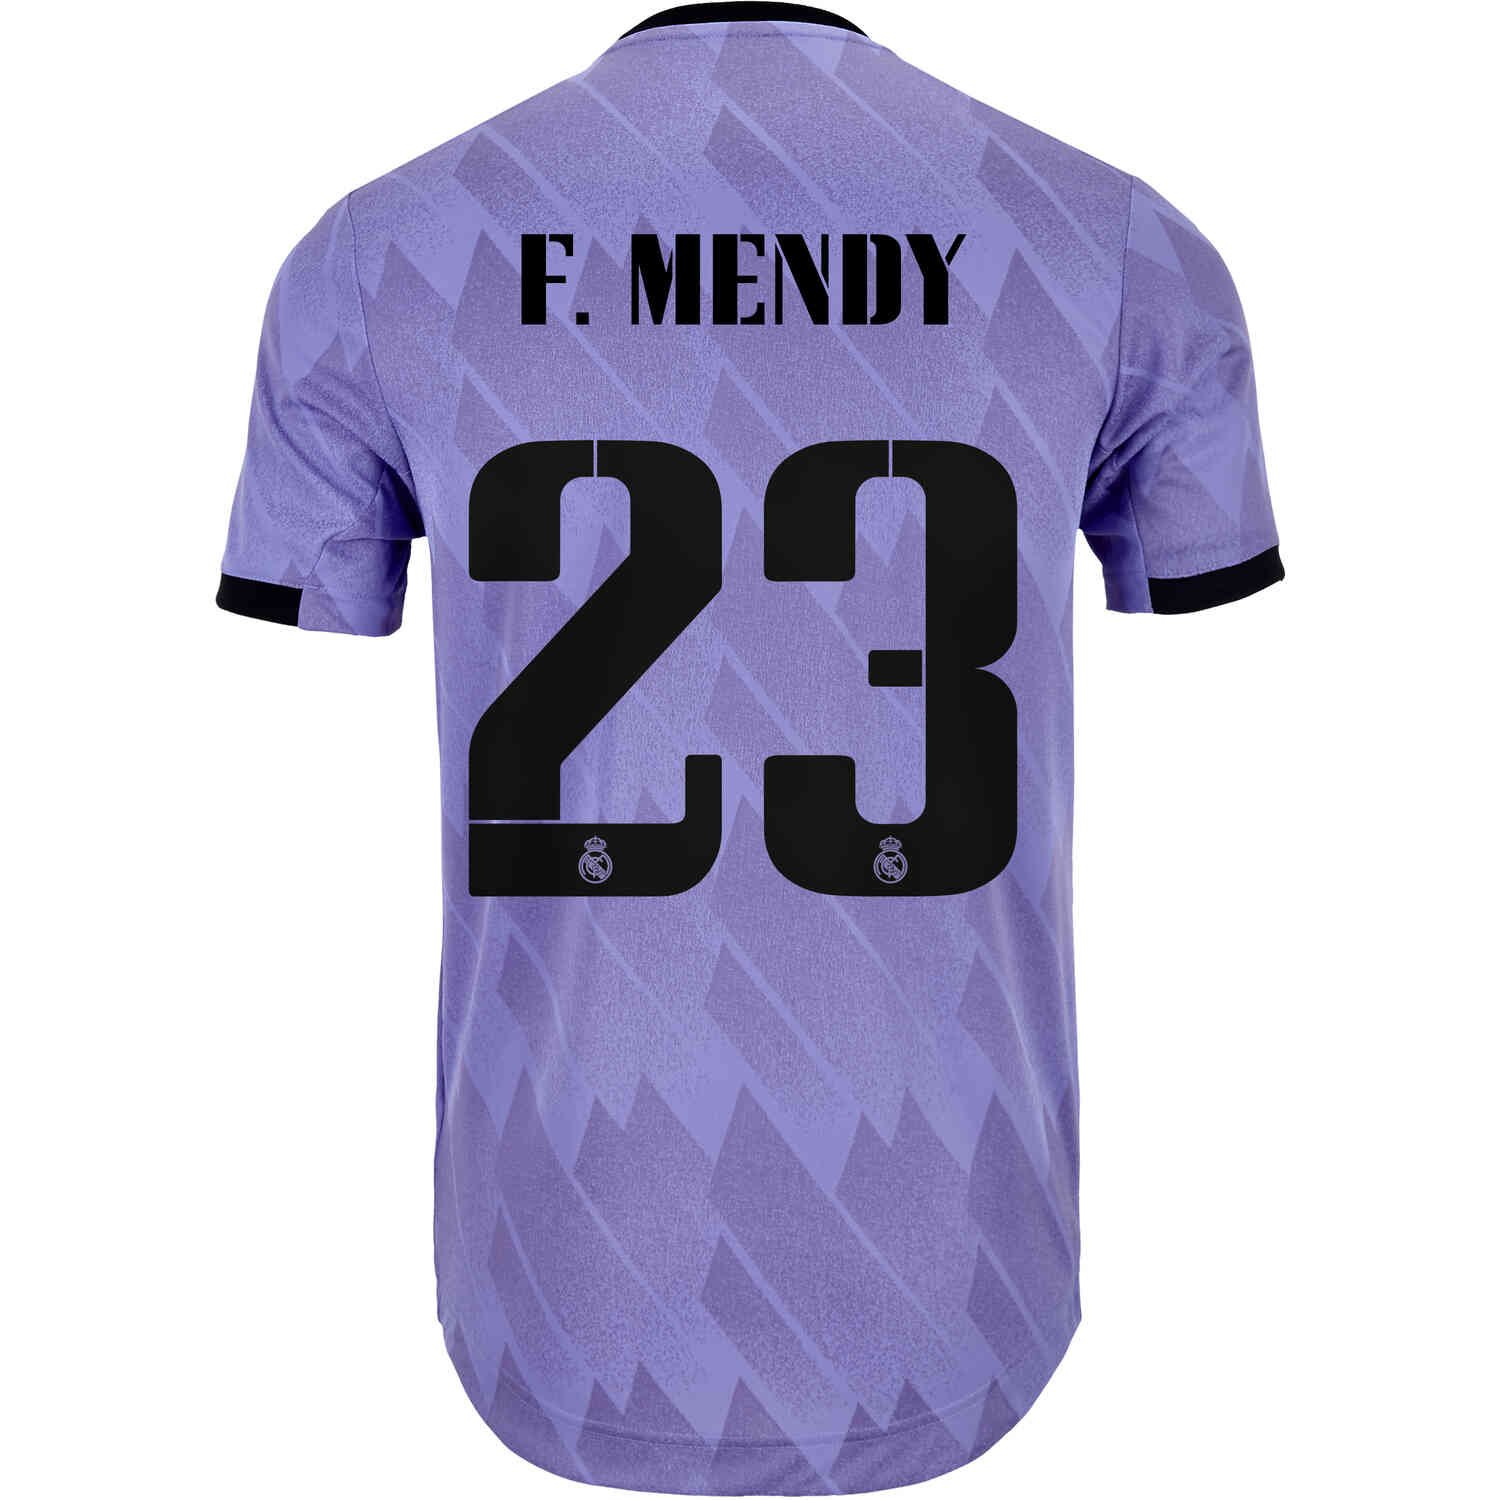 Men's Adidas Eden Hazard White Belgium National Team 2022/23 Away Replica Jersey Size: 3XL